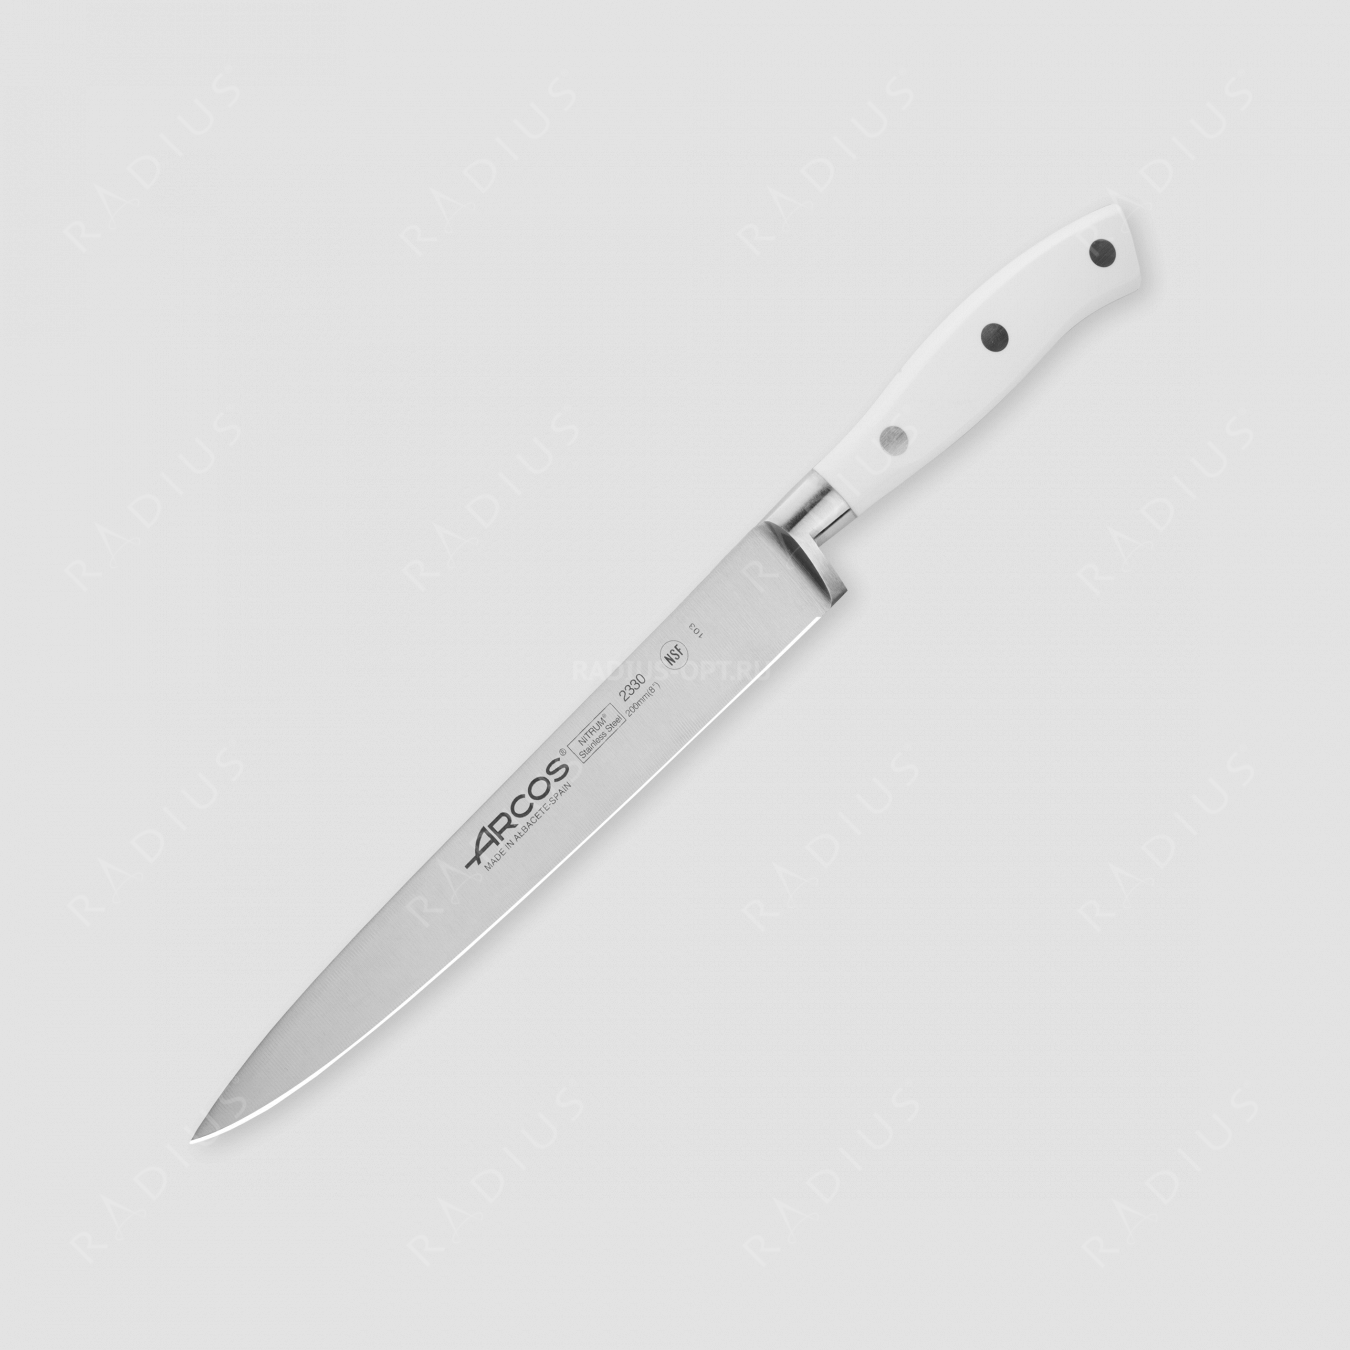 Нож кухонный для нарезки мяса 20 см, серия Riviera Blanca, ARCOS, Испания